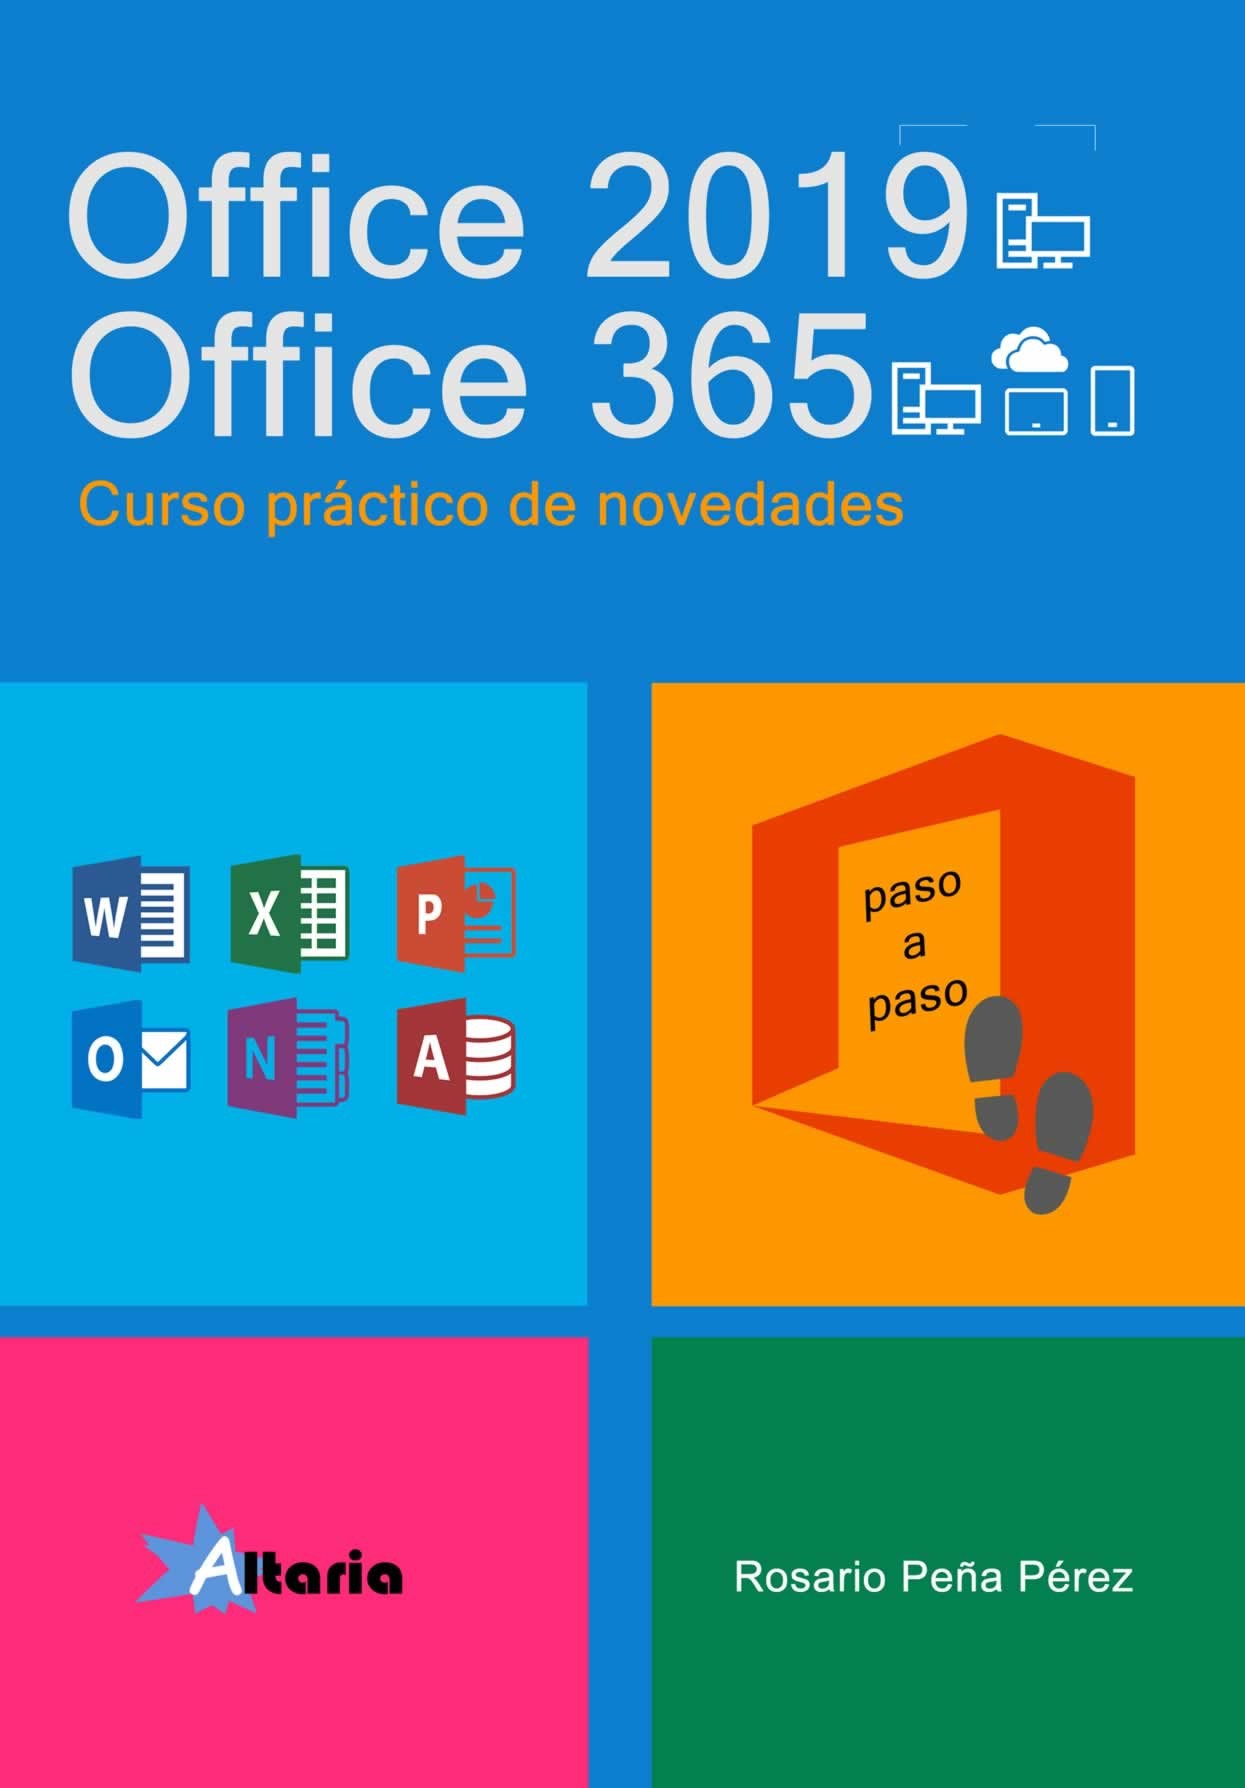 Office 2019- Office 365